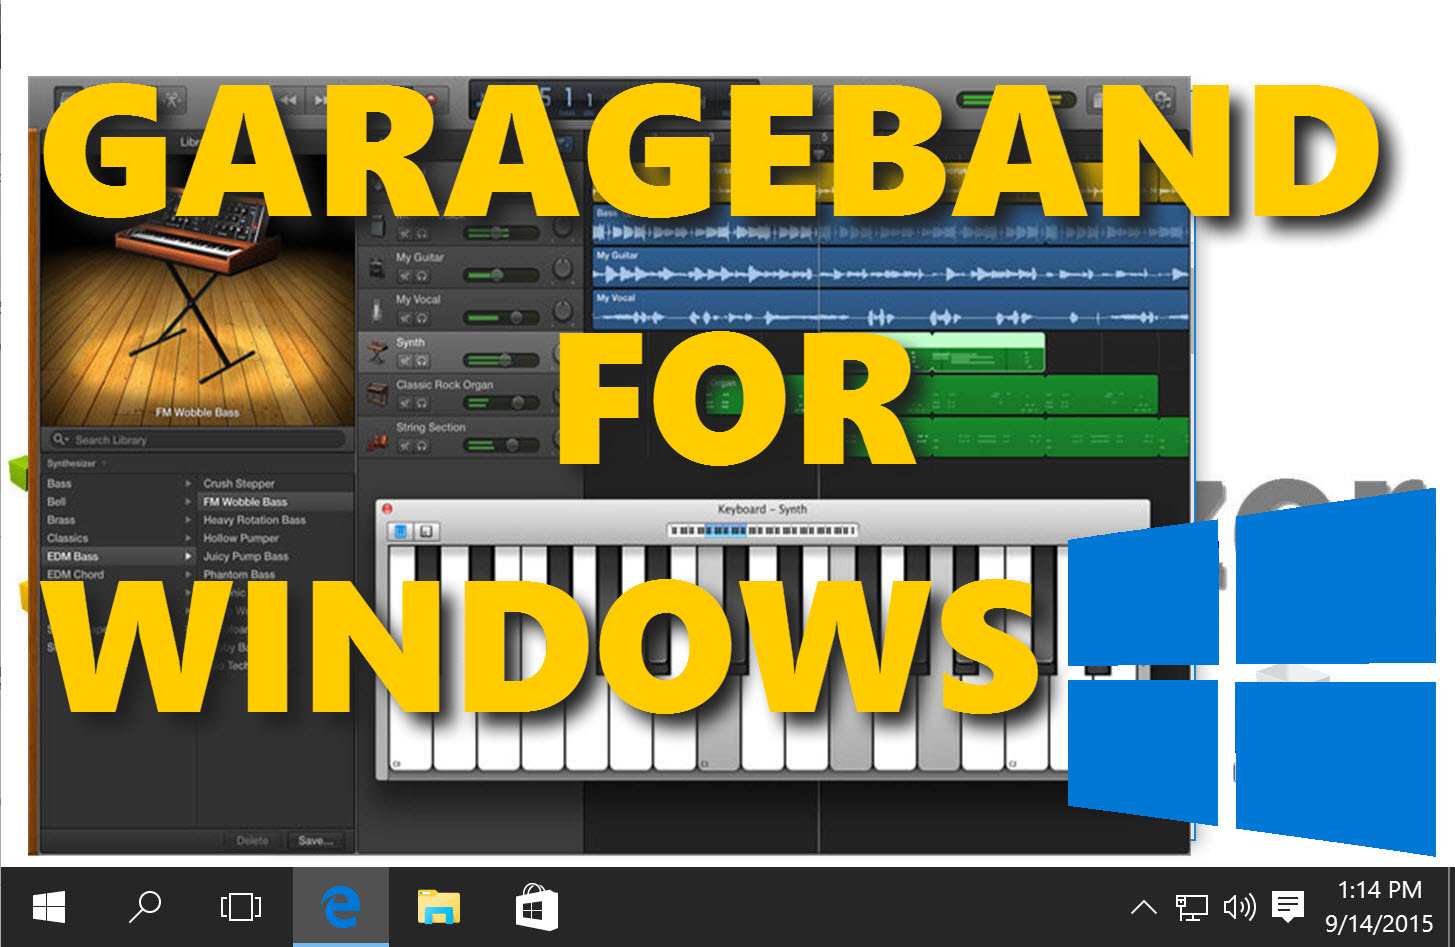 garageband for windows 10 free download